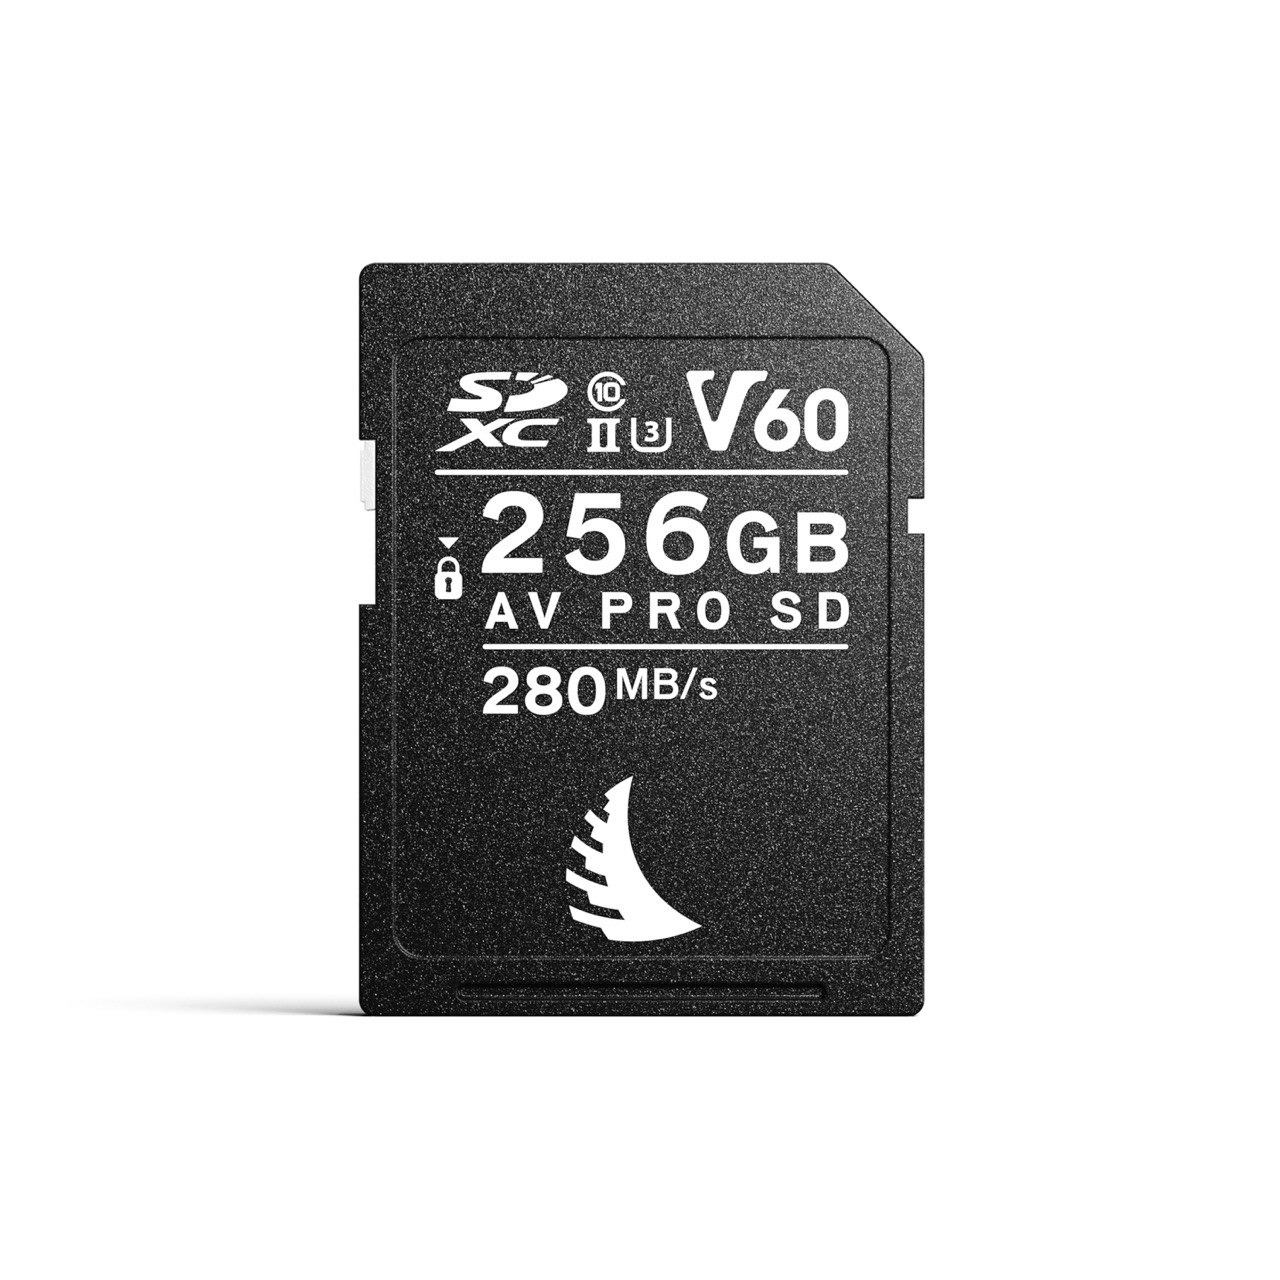 Angelbird AV PRO SD V60 MK2 256GB Speicherkarte, Frontal